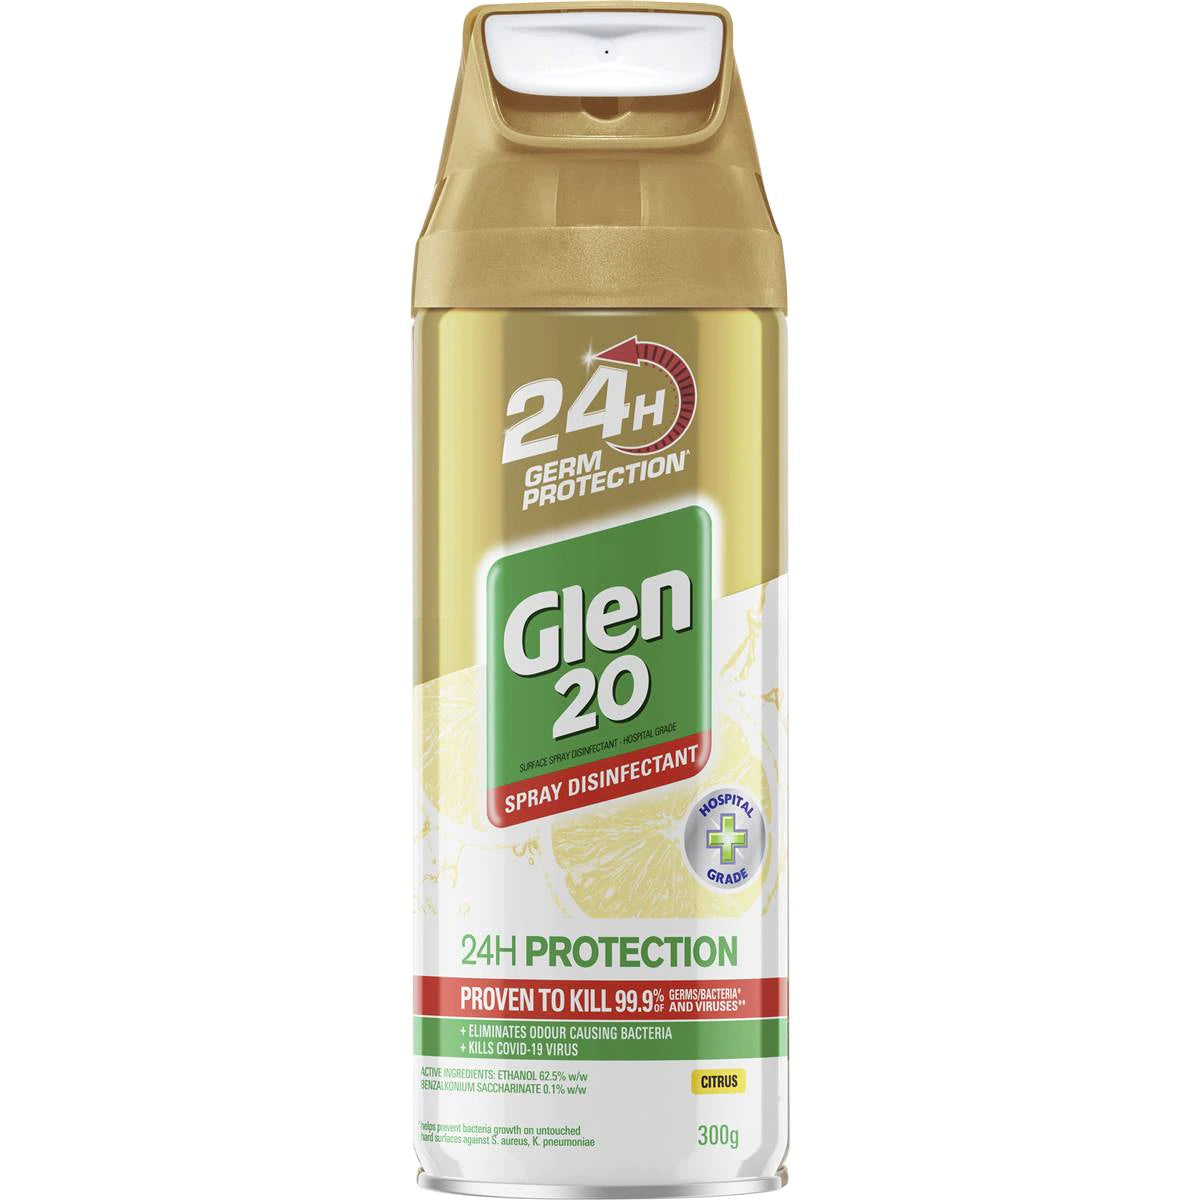 Glen 20 24 Protection Citrus 300g